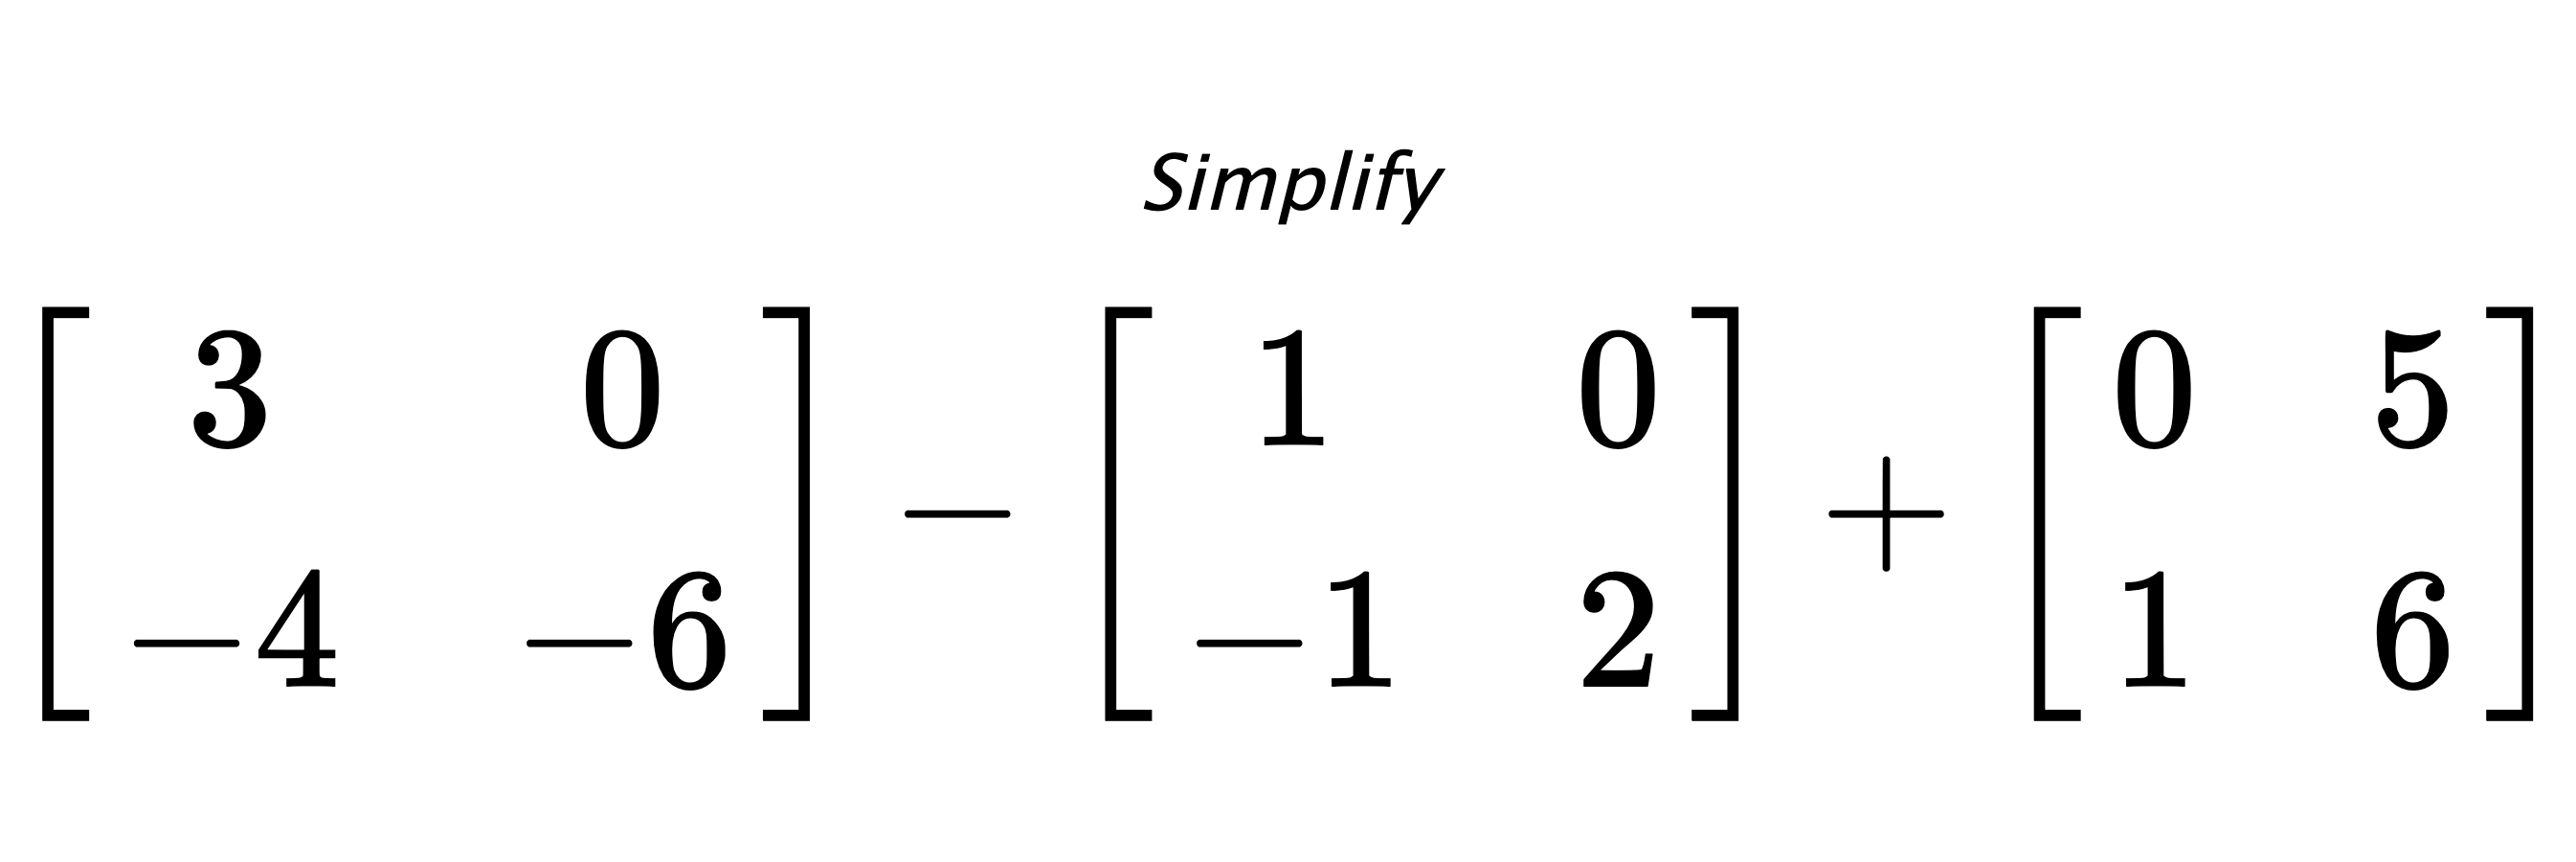 Simplify $ \begin{bmatrix} 3 & 0 \\ -4 & -6 \end{bmatrix} - \begin{bmatrix} 1 & 0 \\ -1 & 2 \end{bmatrix} + \begin{bmatrix} 0 & 5 \\ 1 & 6 \end{bmatrix} $